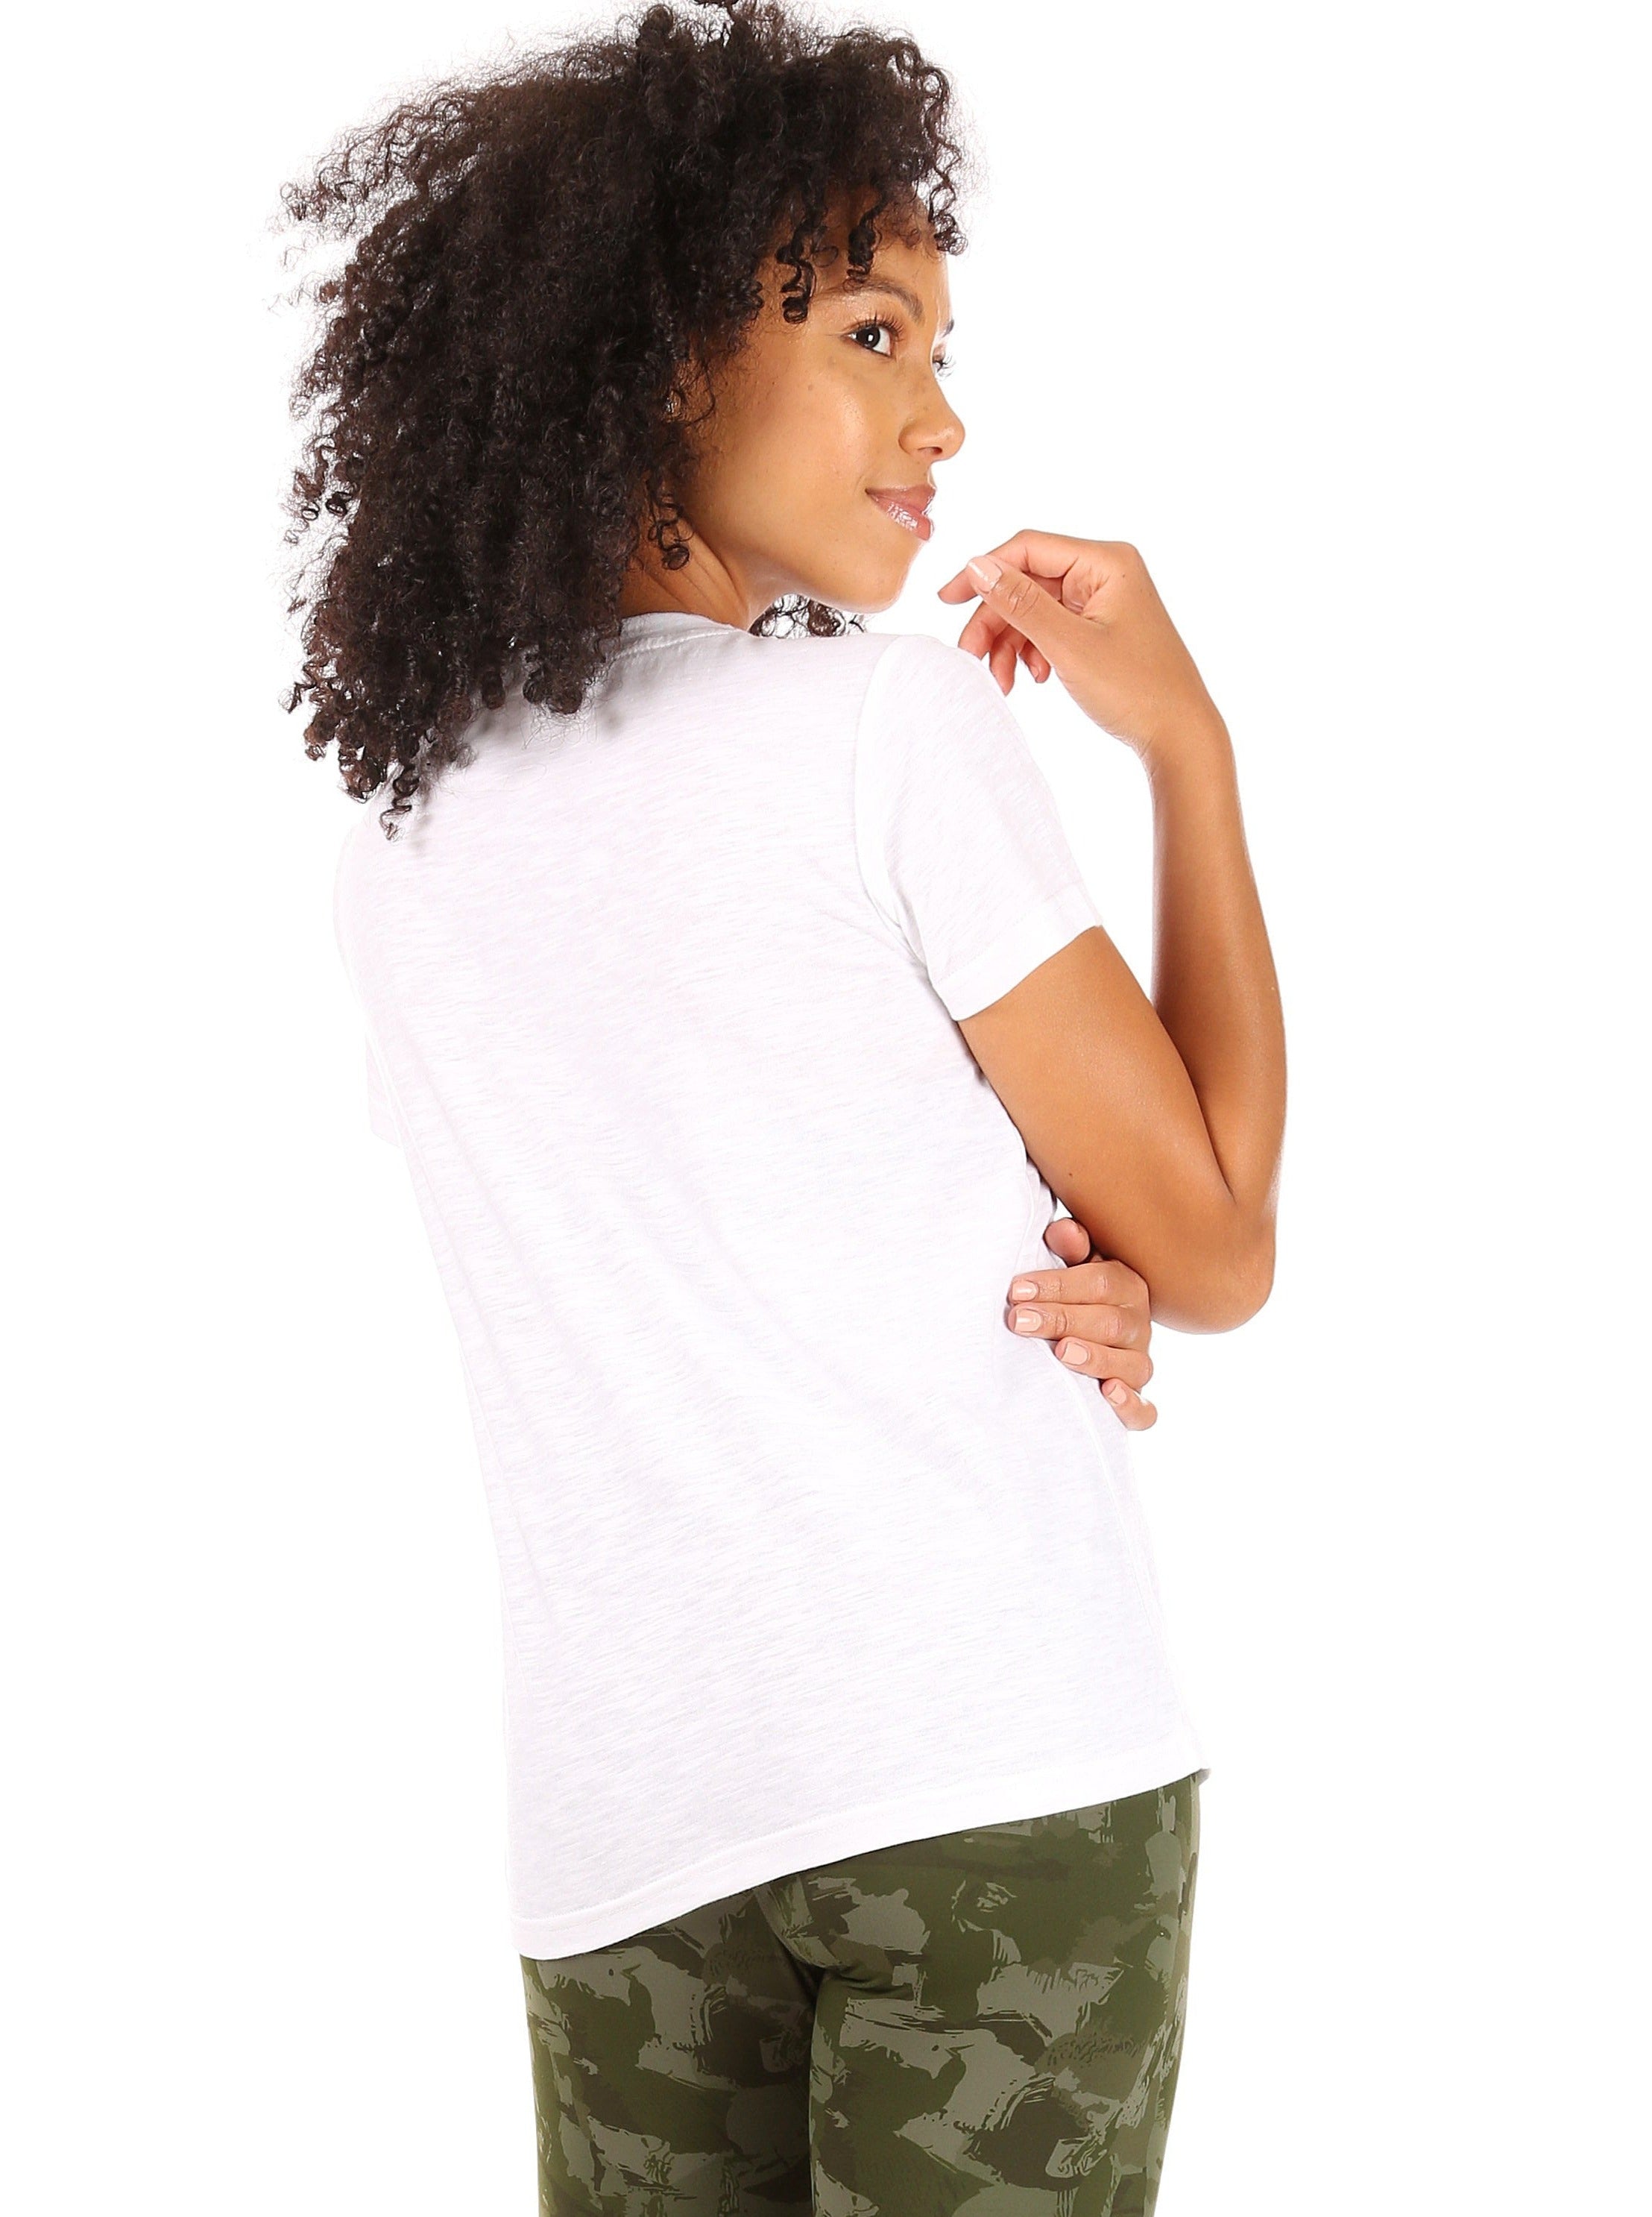 Women's "GROW POSITIVE THOUGHTS" Short Sleeve Classic Slub T-Shirt - Rae Dunn Wear